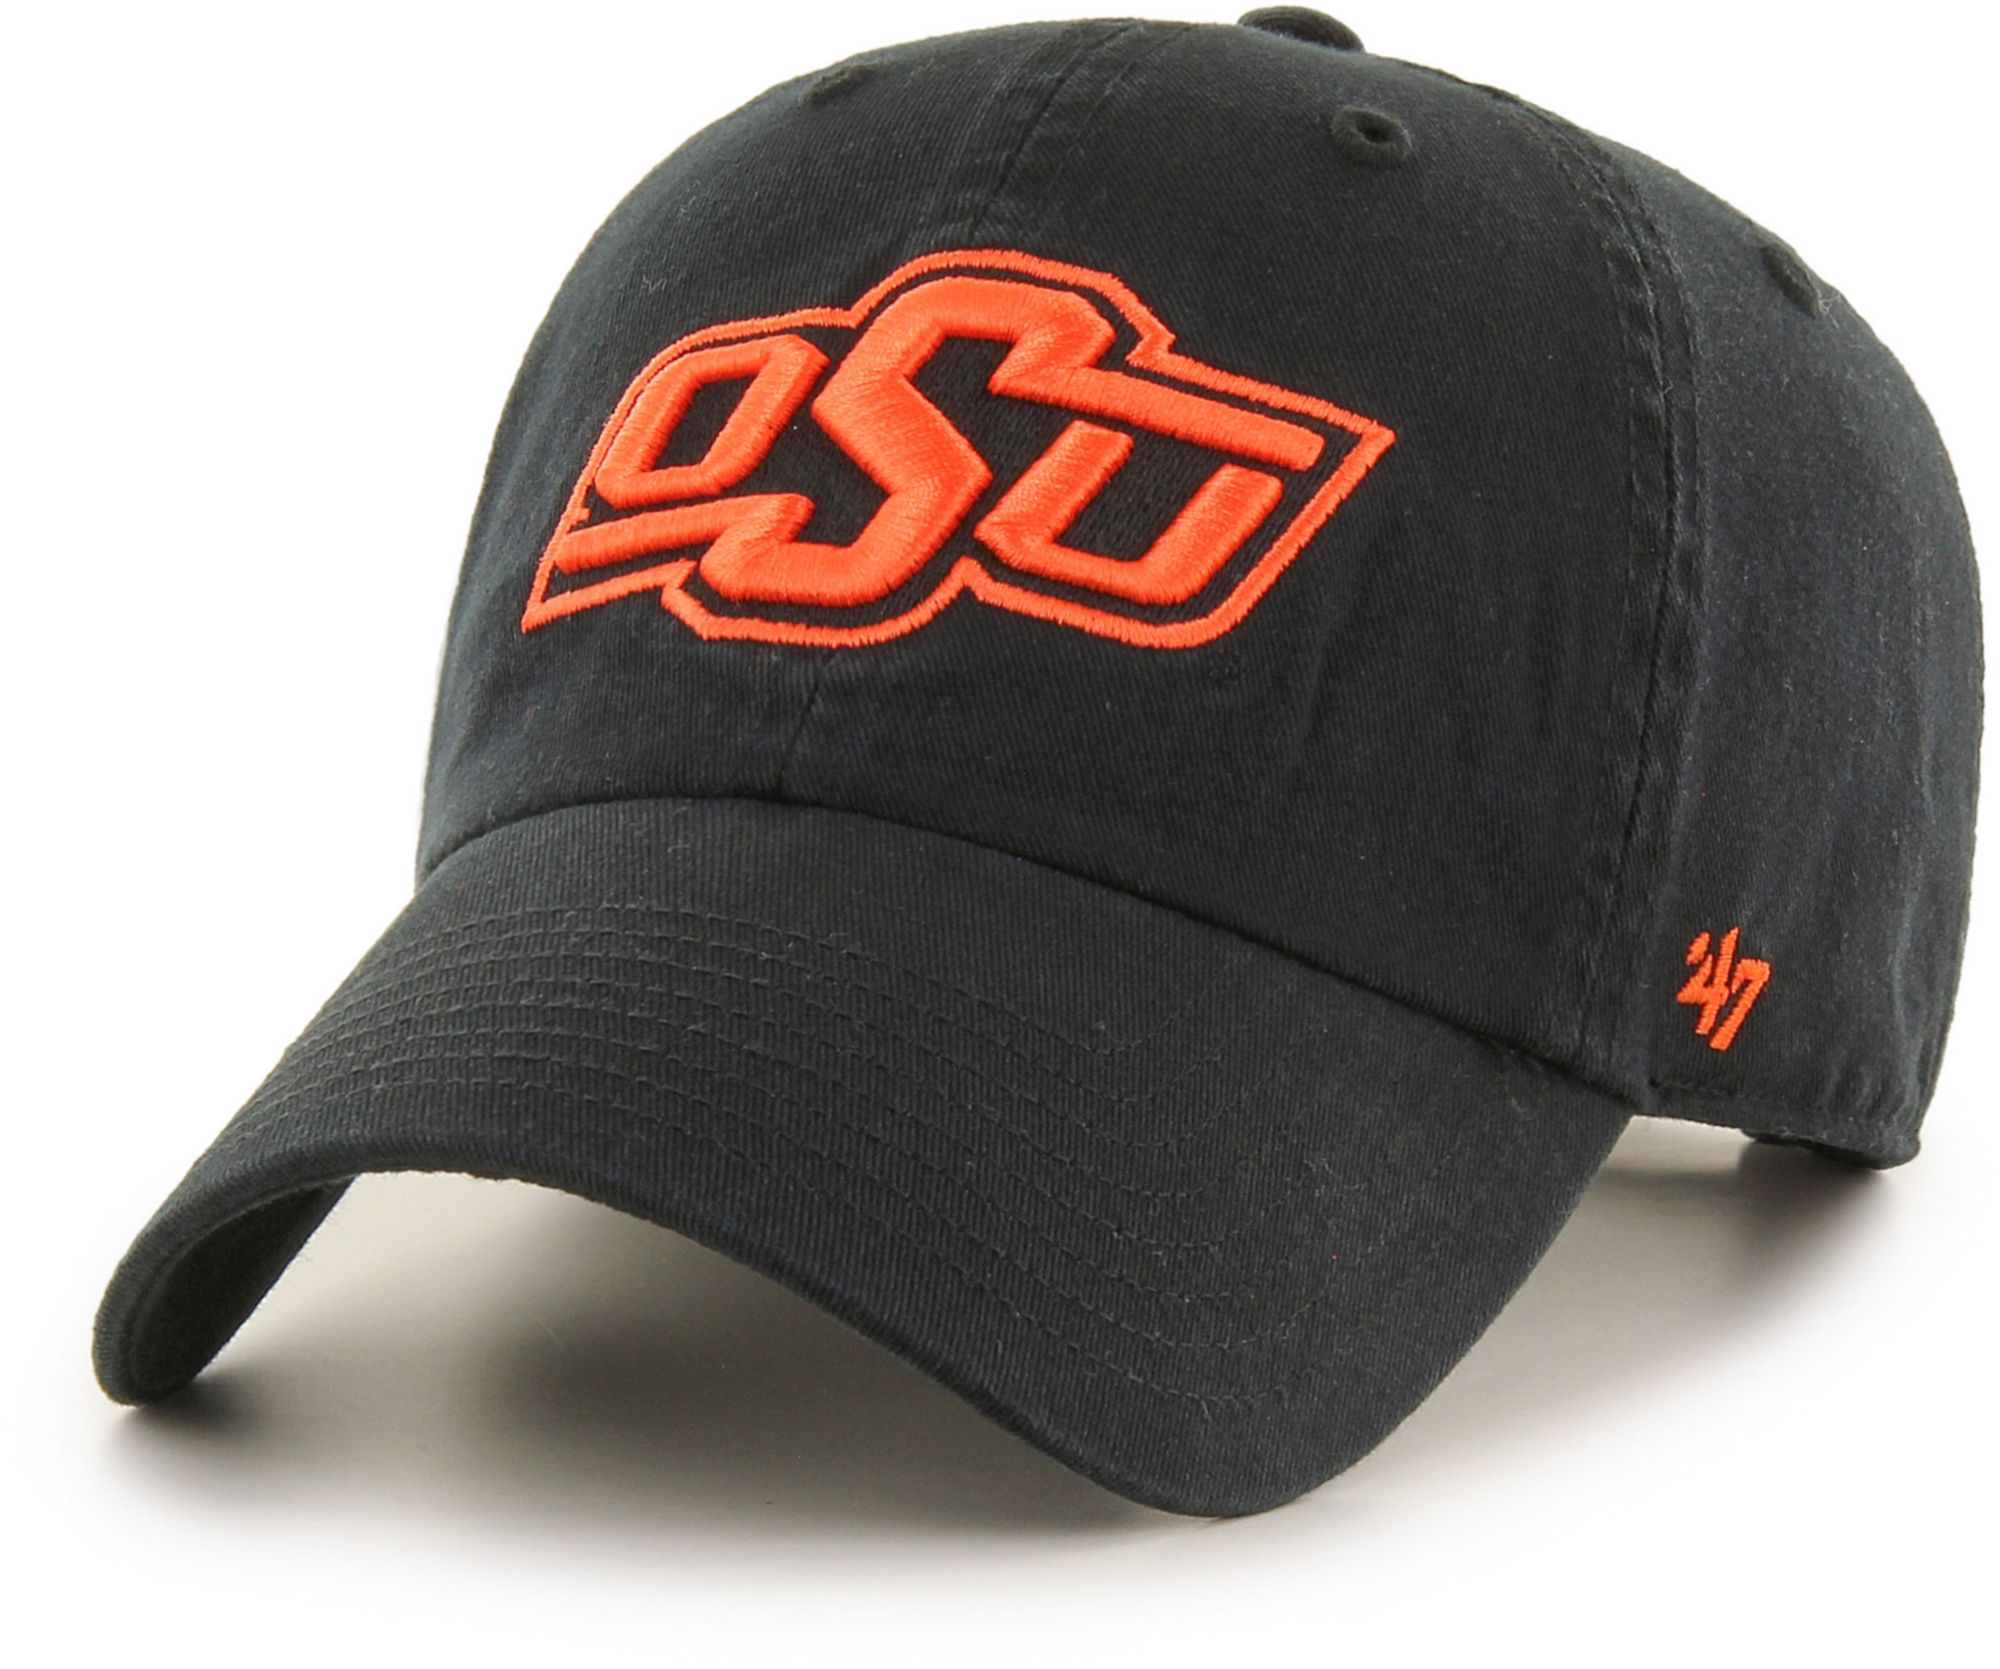 Oklahoma State Cowboys diving cap